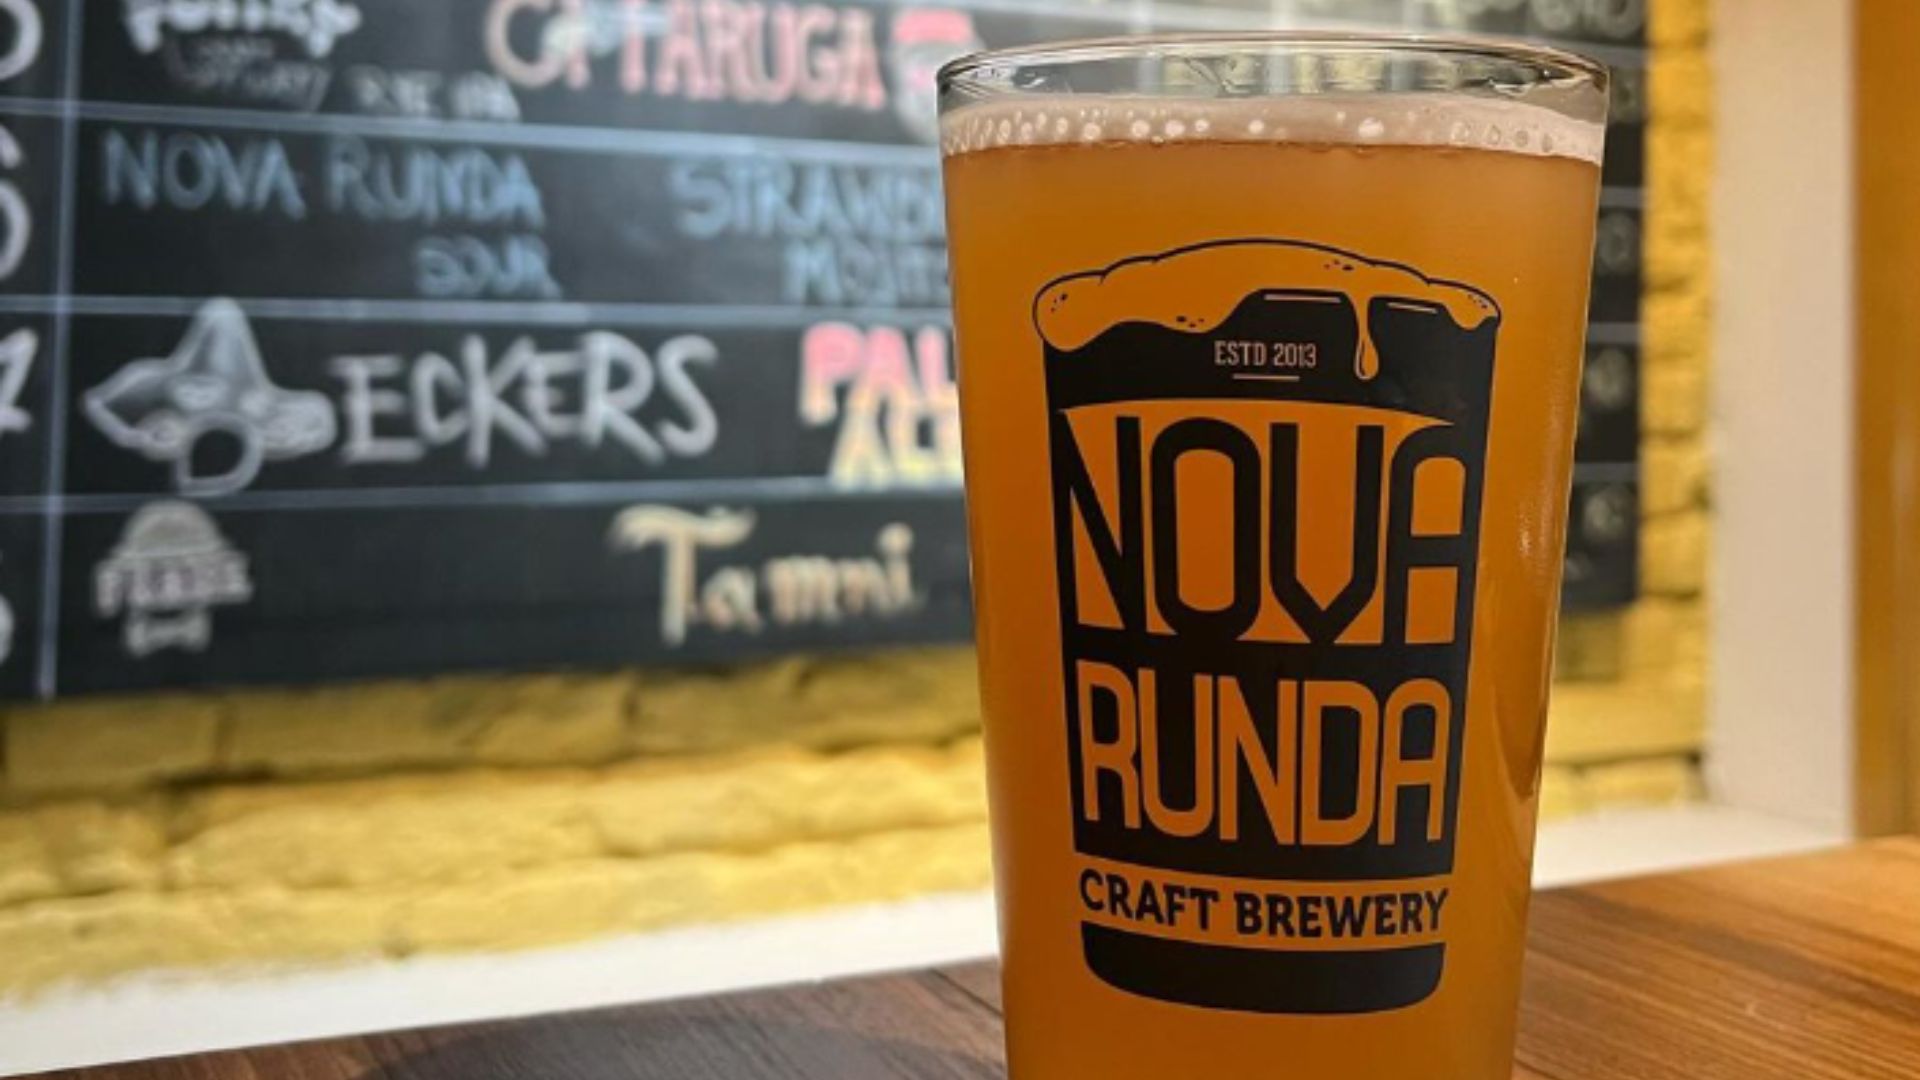 Nova Runda Craft Brewery is one of a handful of Croatian companies exporting to China. /Nova Runda